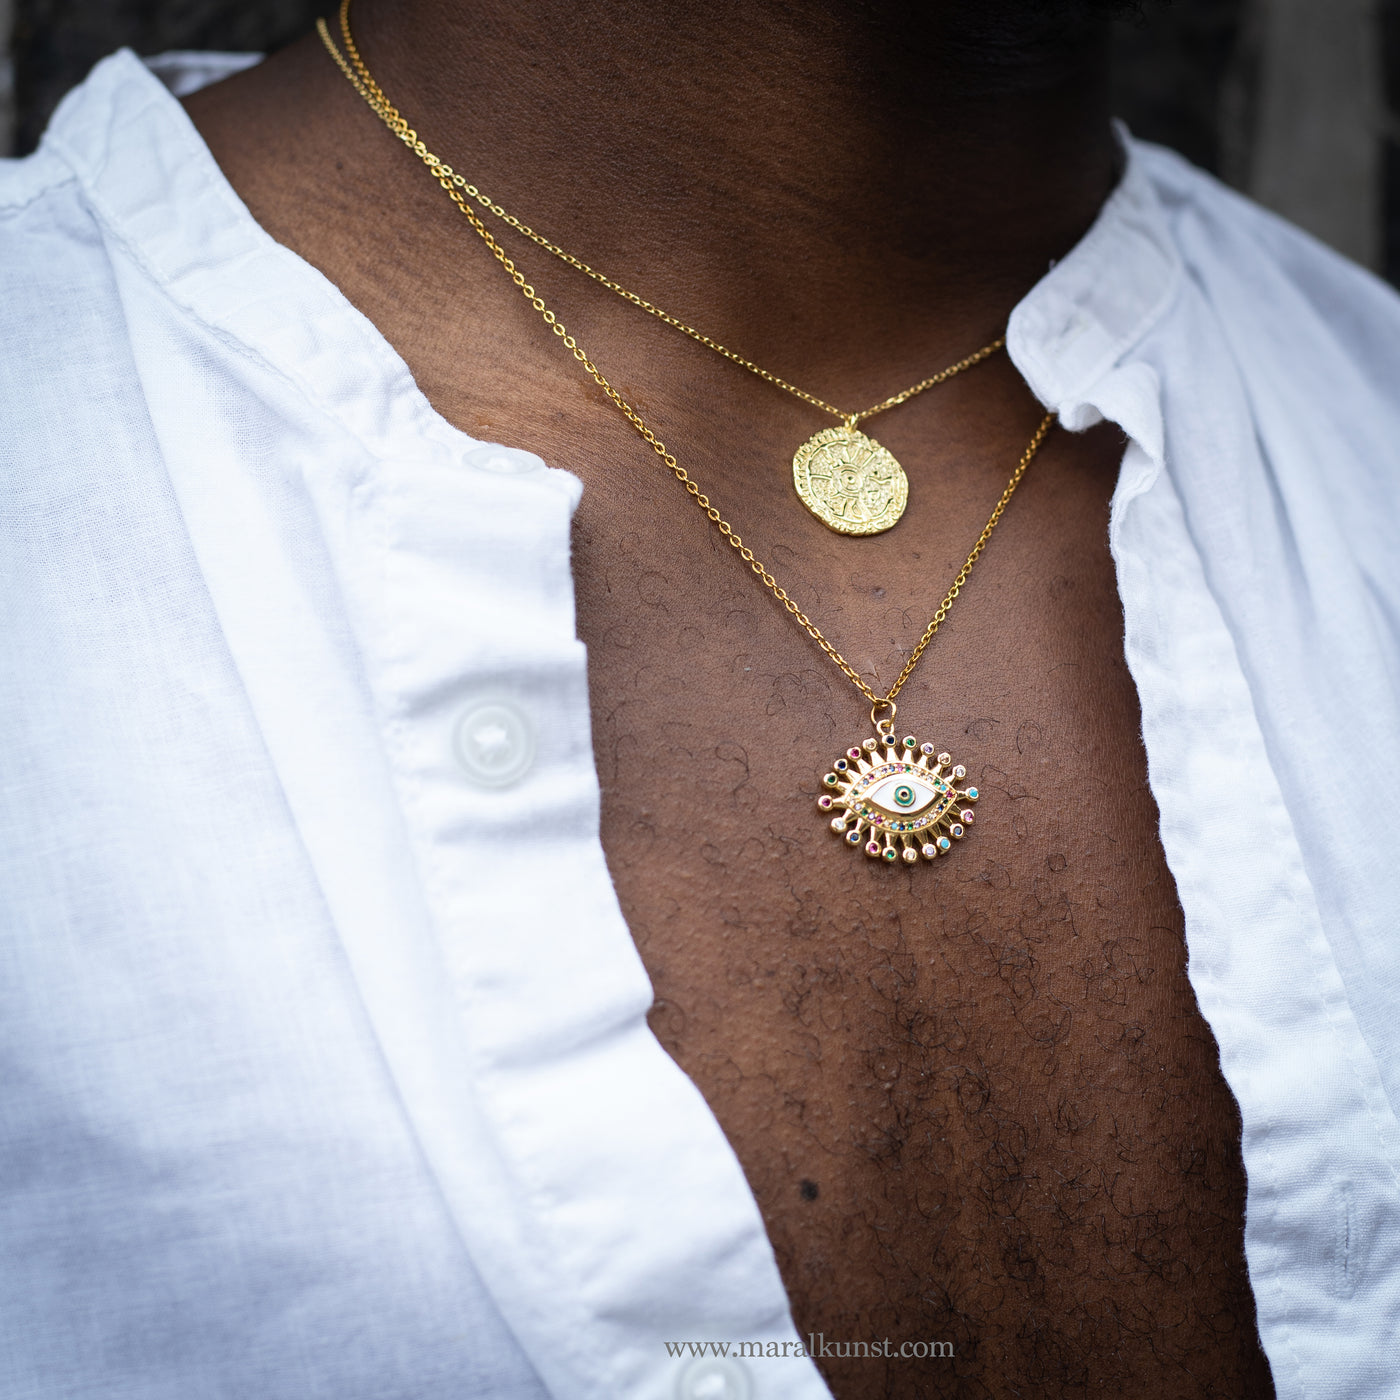 zodiac sign 925 silver necklace